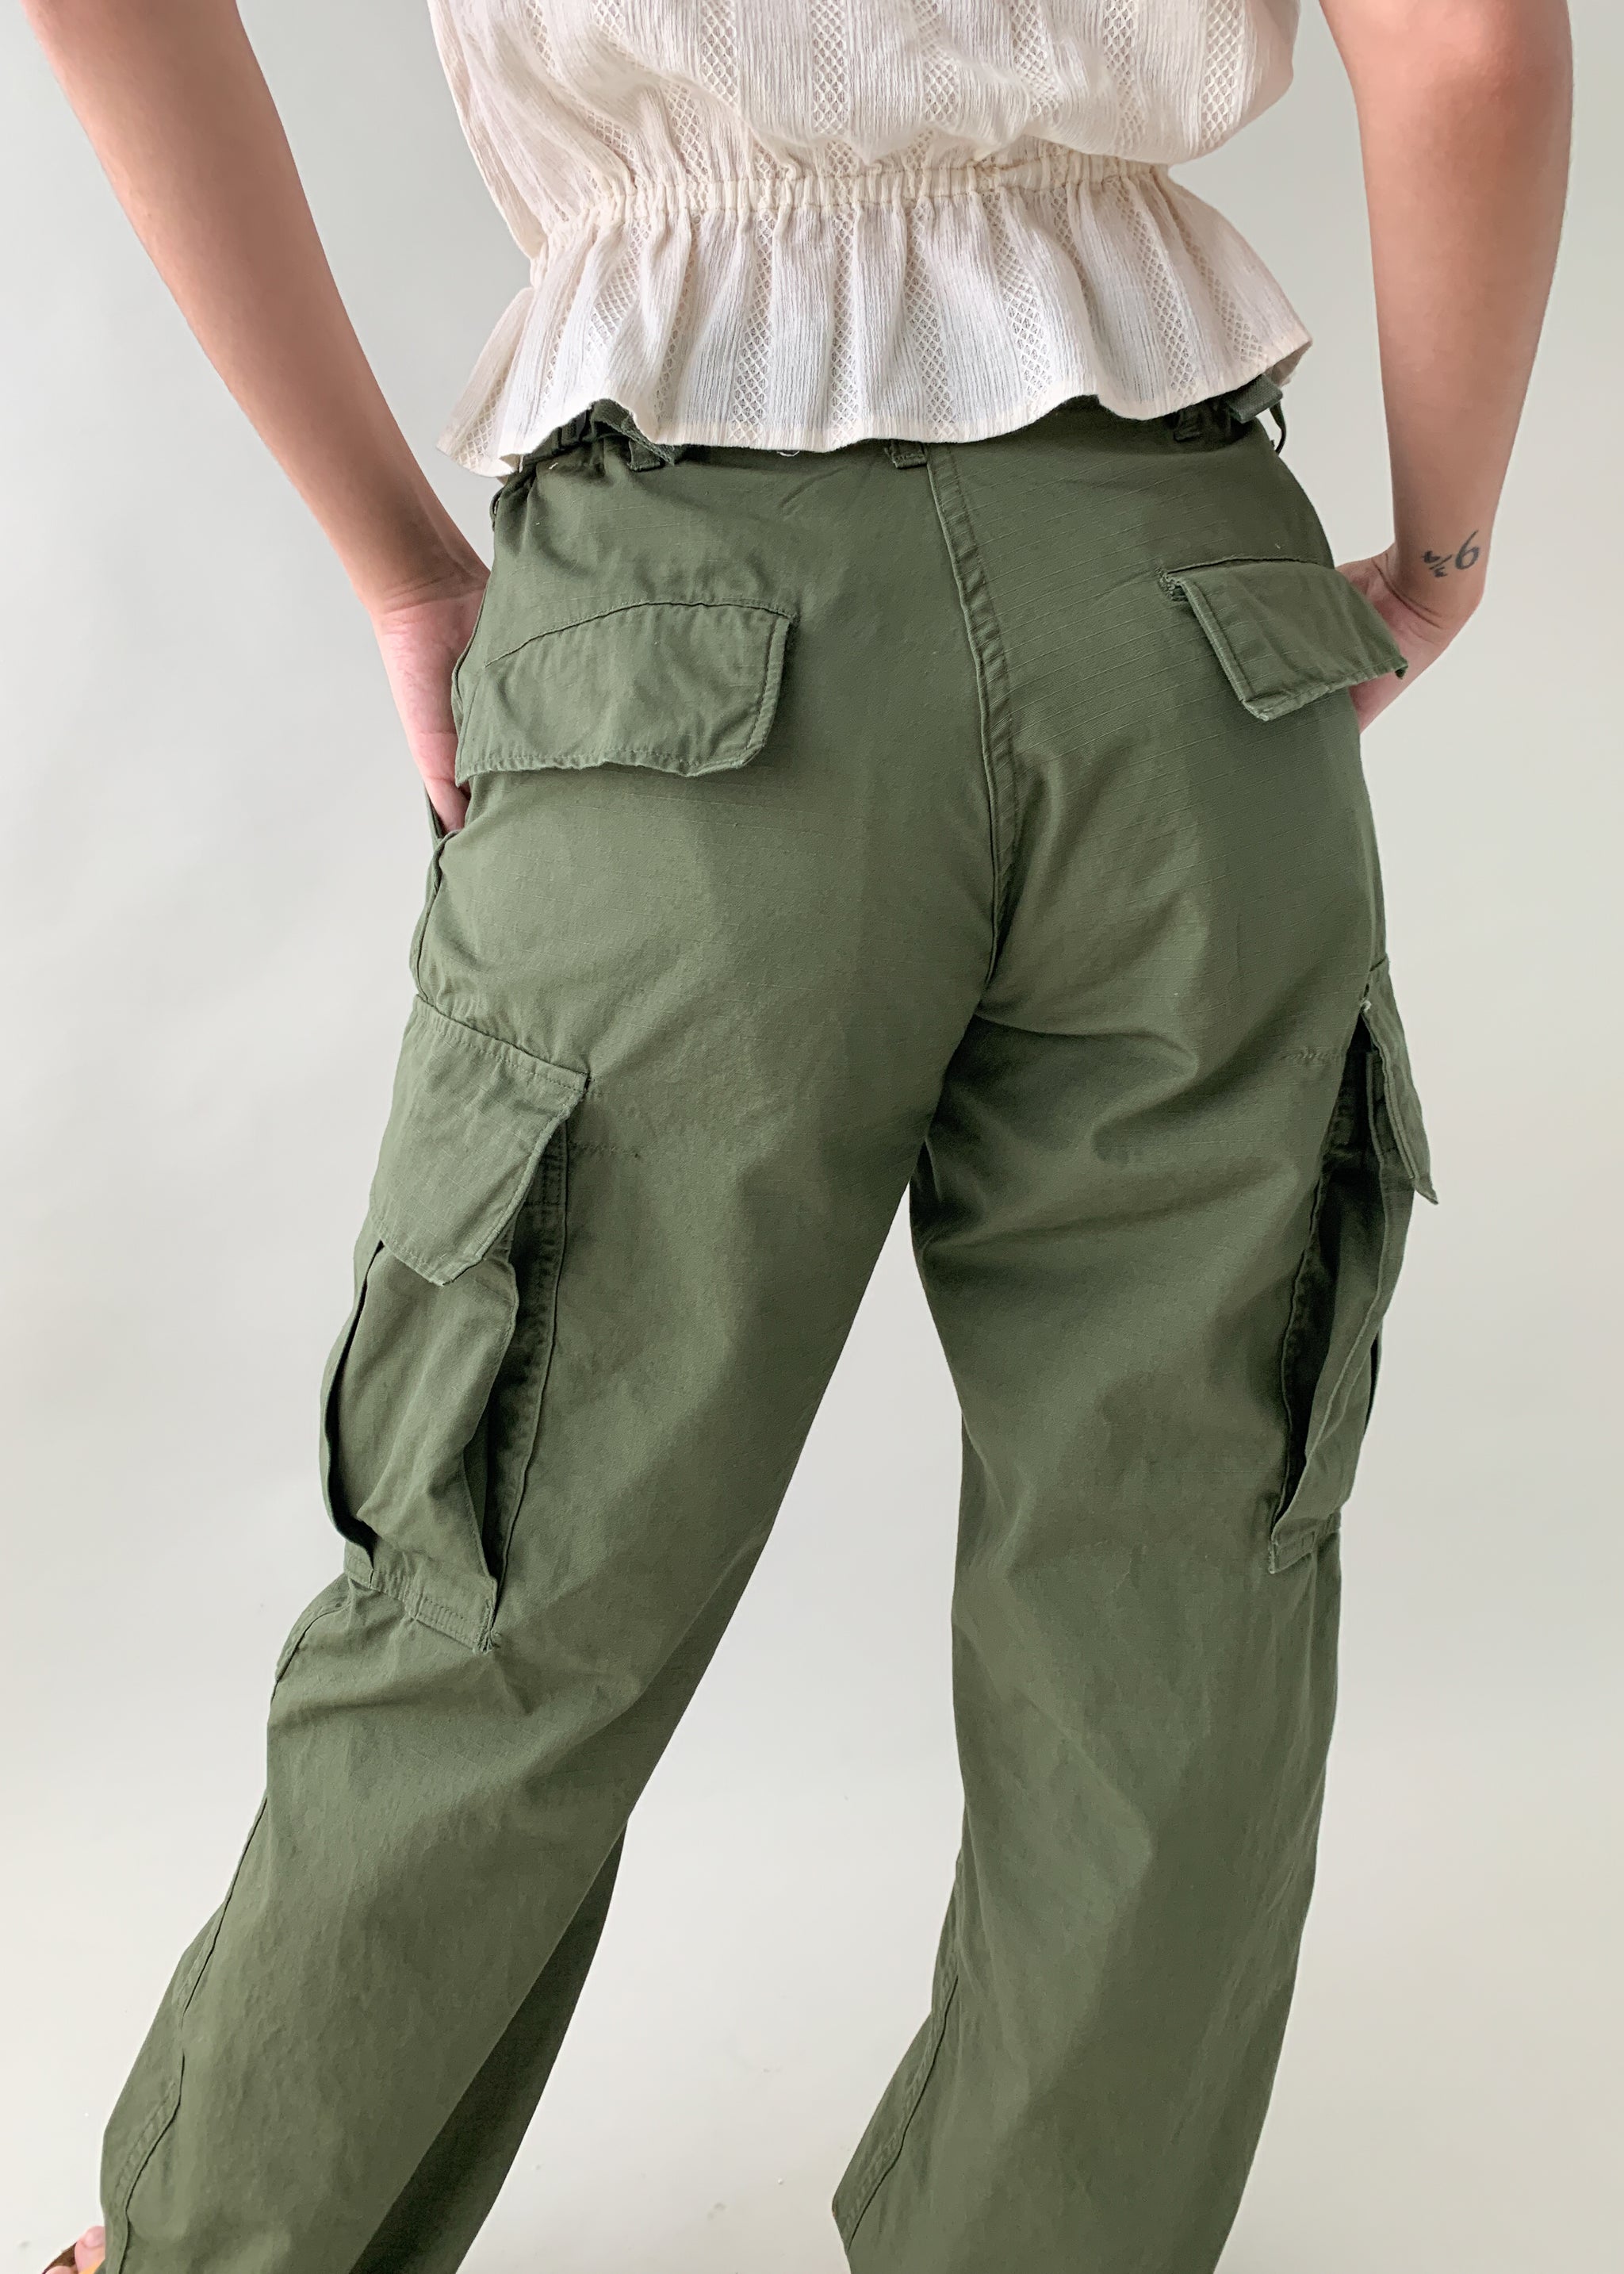 Jessie Kidden Men's BDU Casual Military Pants, Tactical Wild India | Ubuy